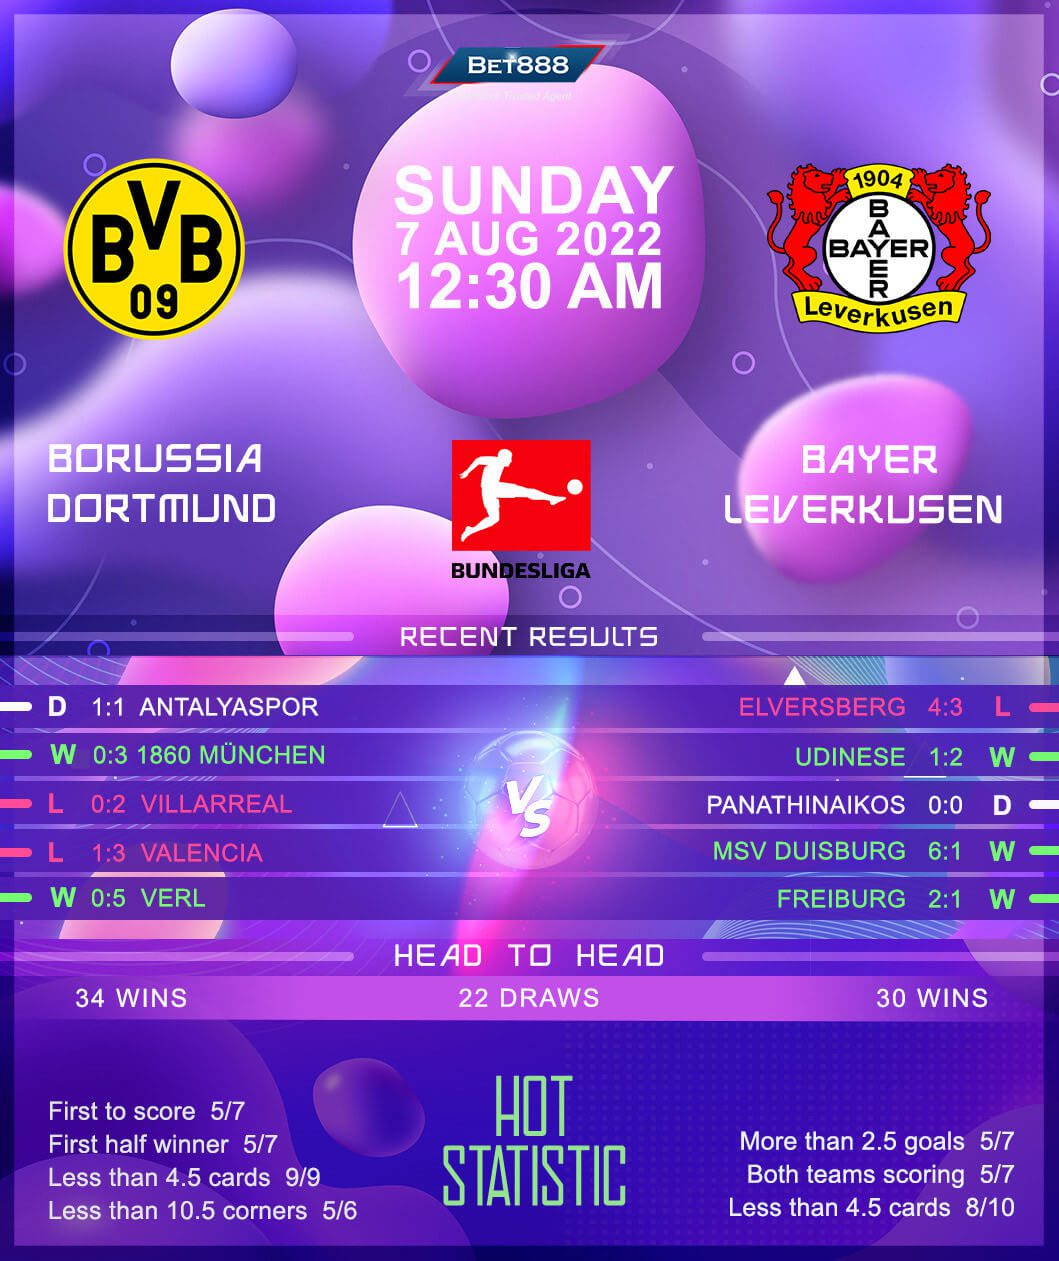 Bet888win: Borussia Dortmund vs Bayer Leverkusen